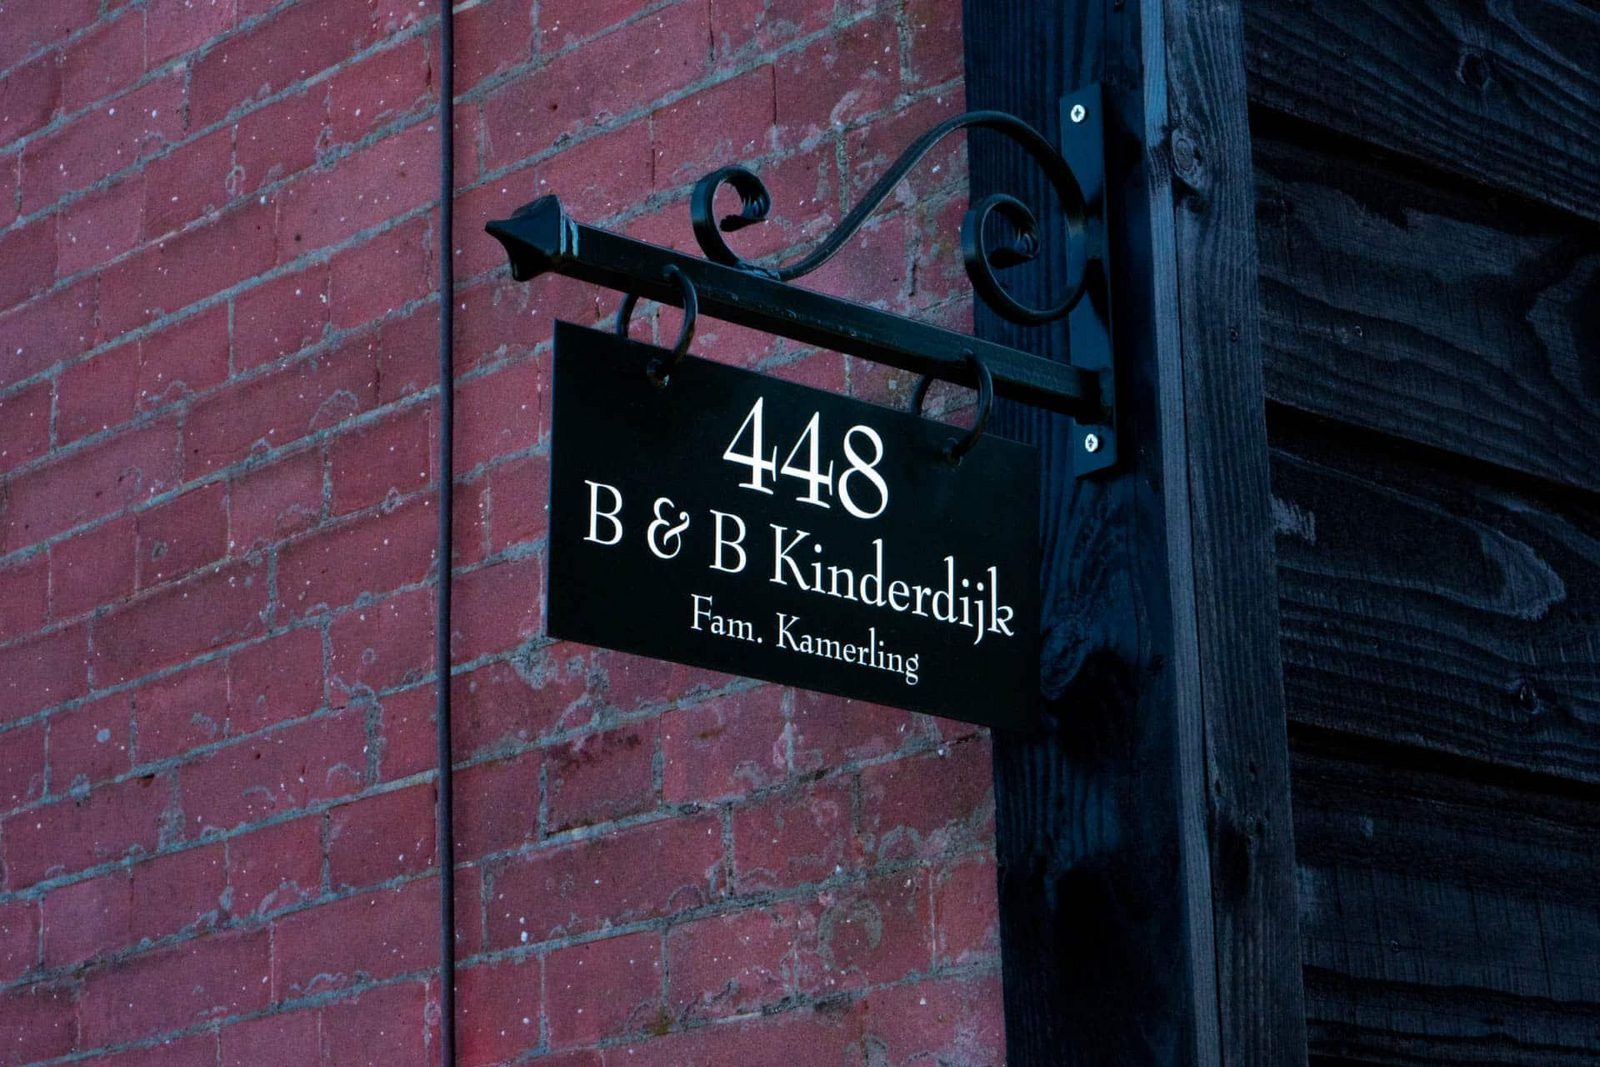 B&B Kinderdijk - Vakantiehuis